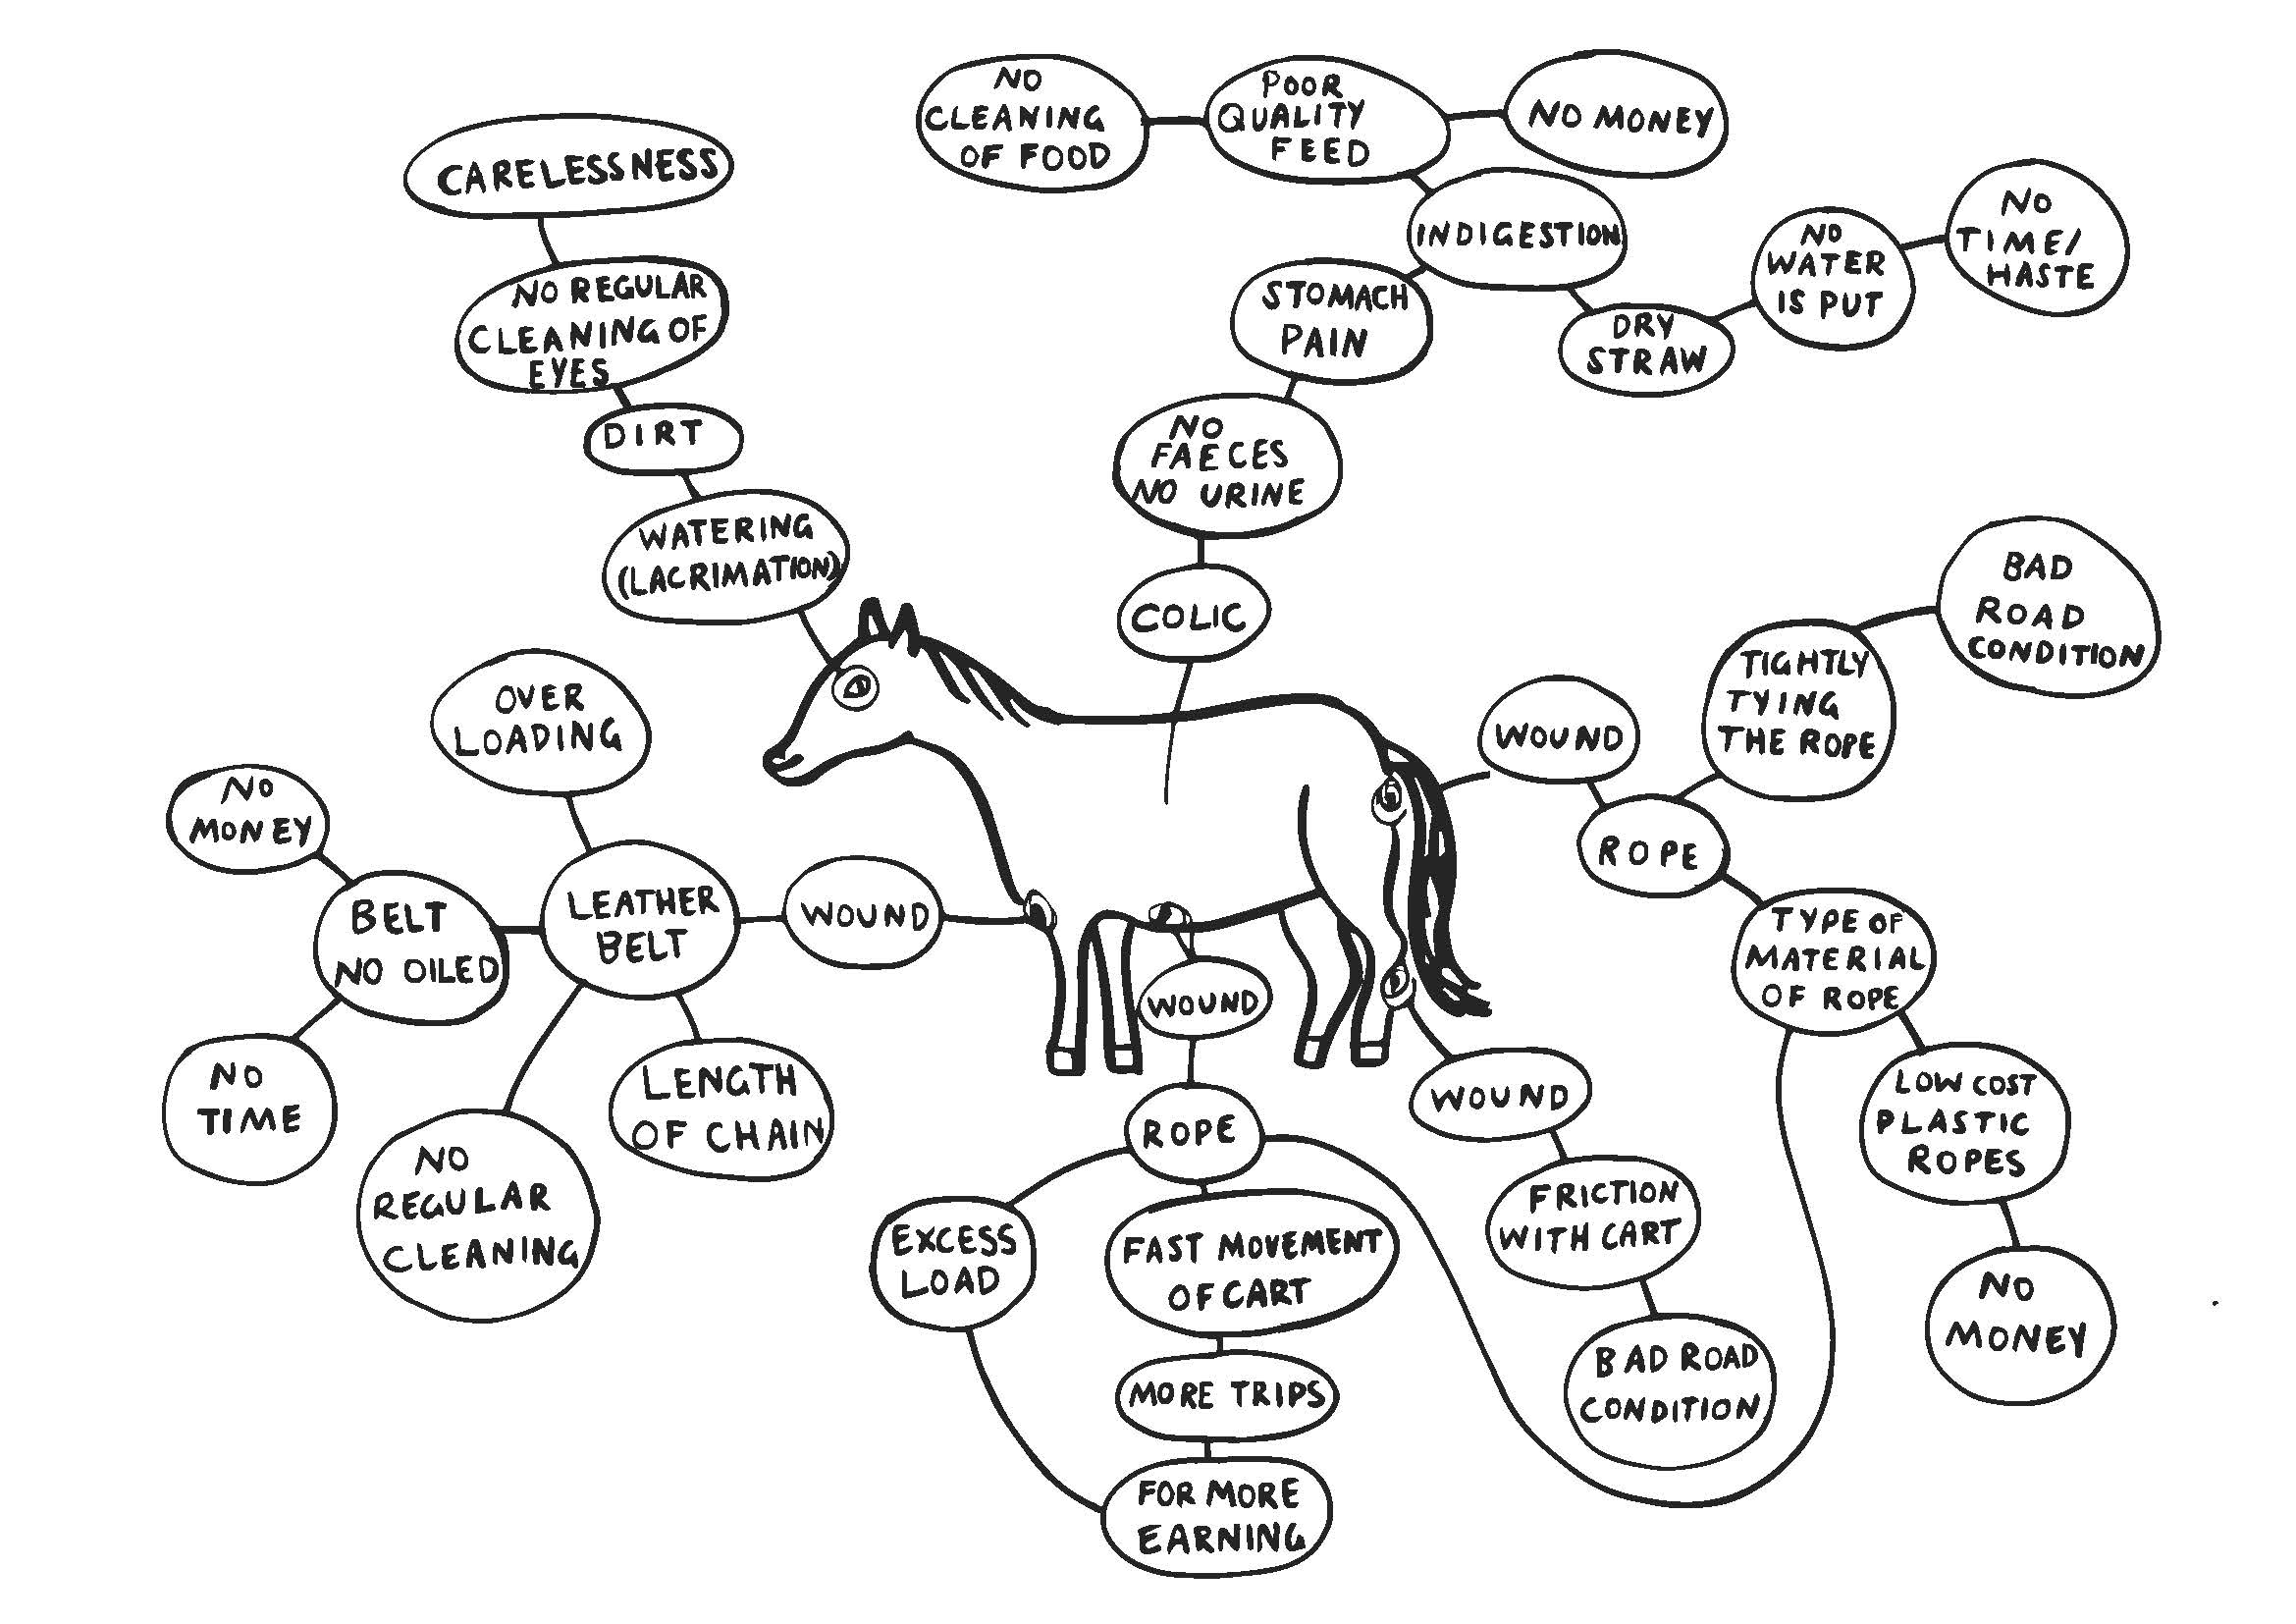 Figure T25a Problem animal diagram